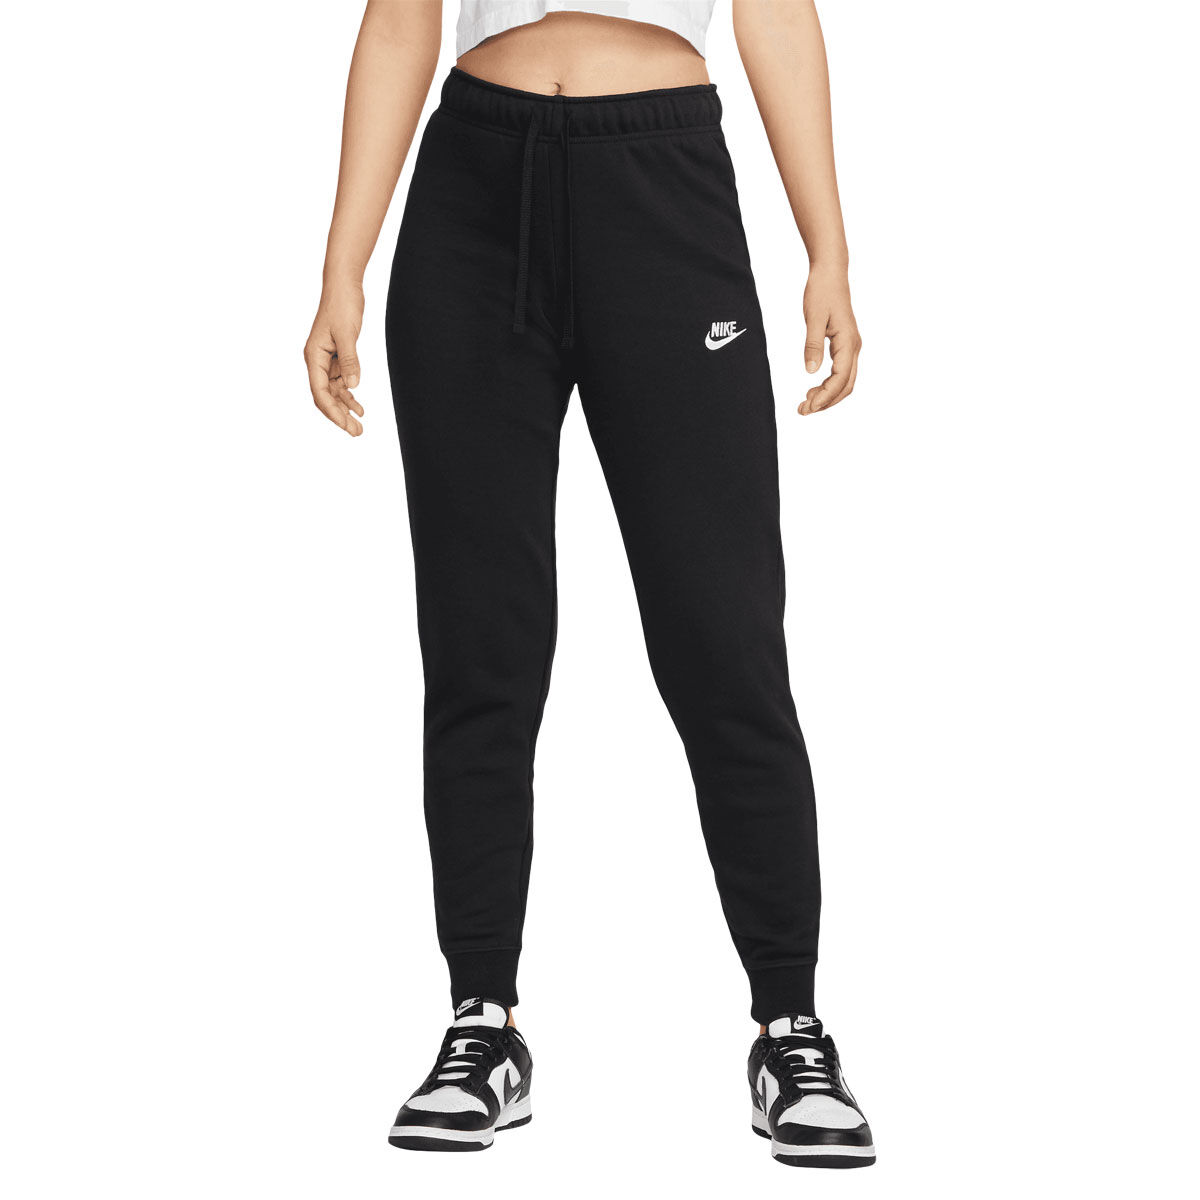 Loose-fit fleece jogger, Nike, Shop Women's Casual Pants Online